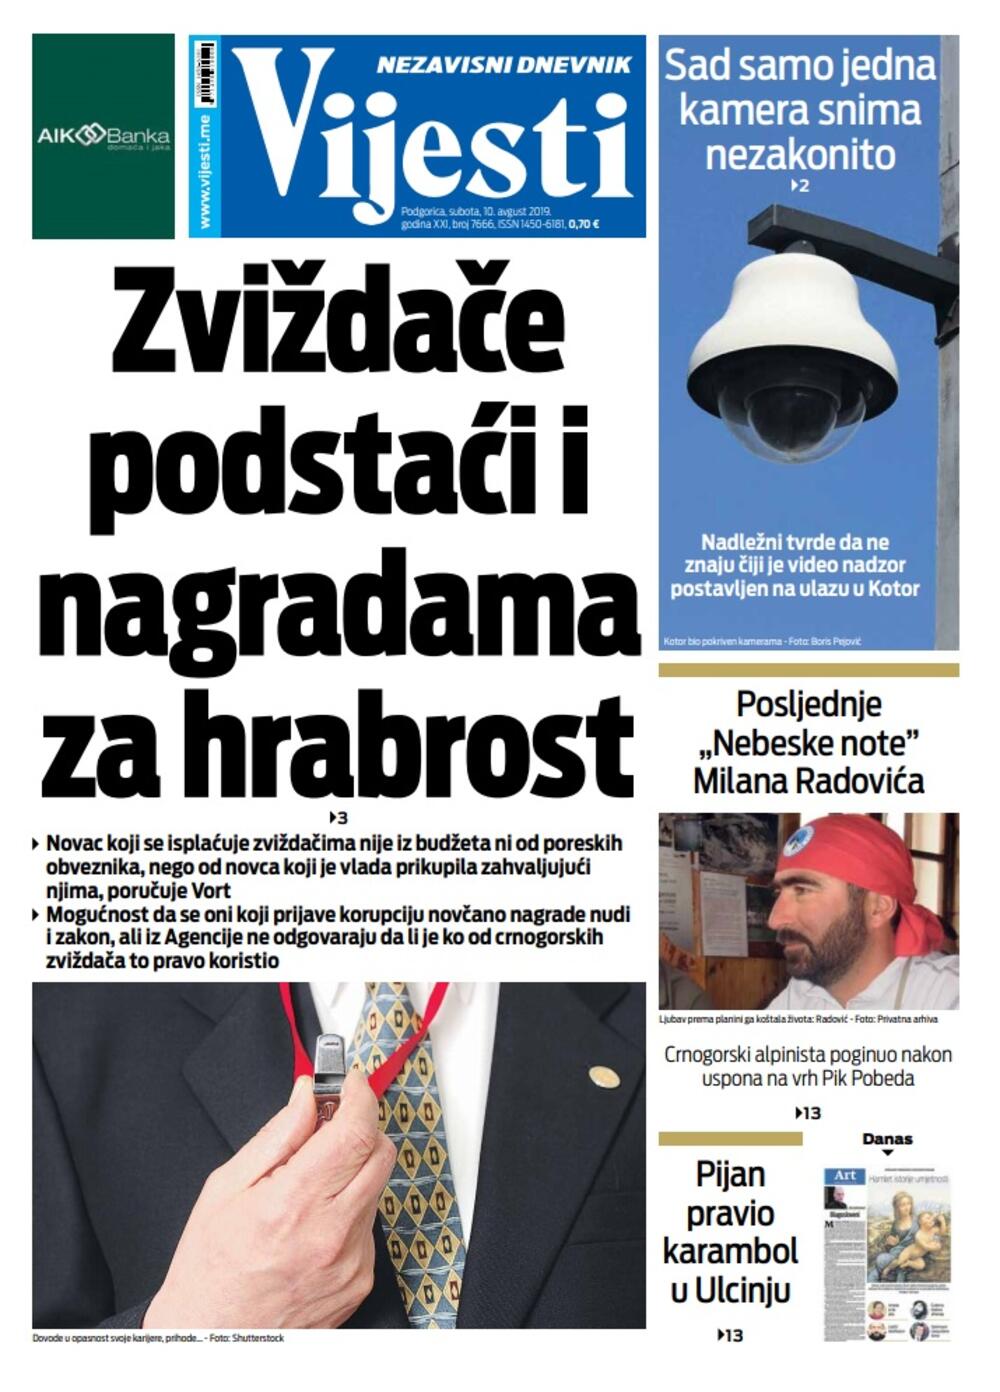 Naslovna strana "Vijesti" za 10. avgust